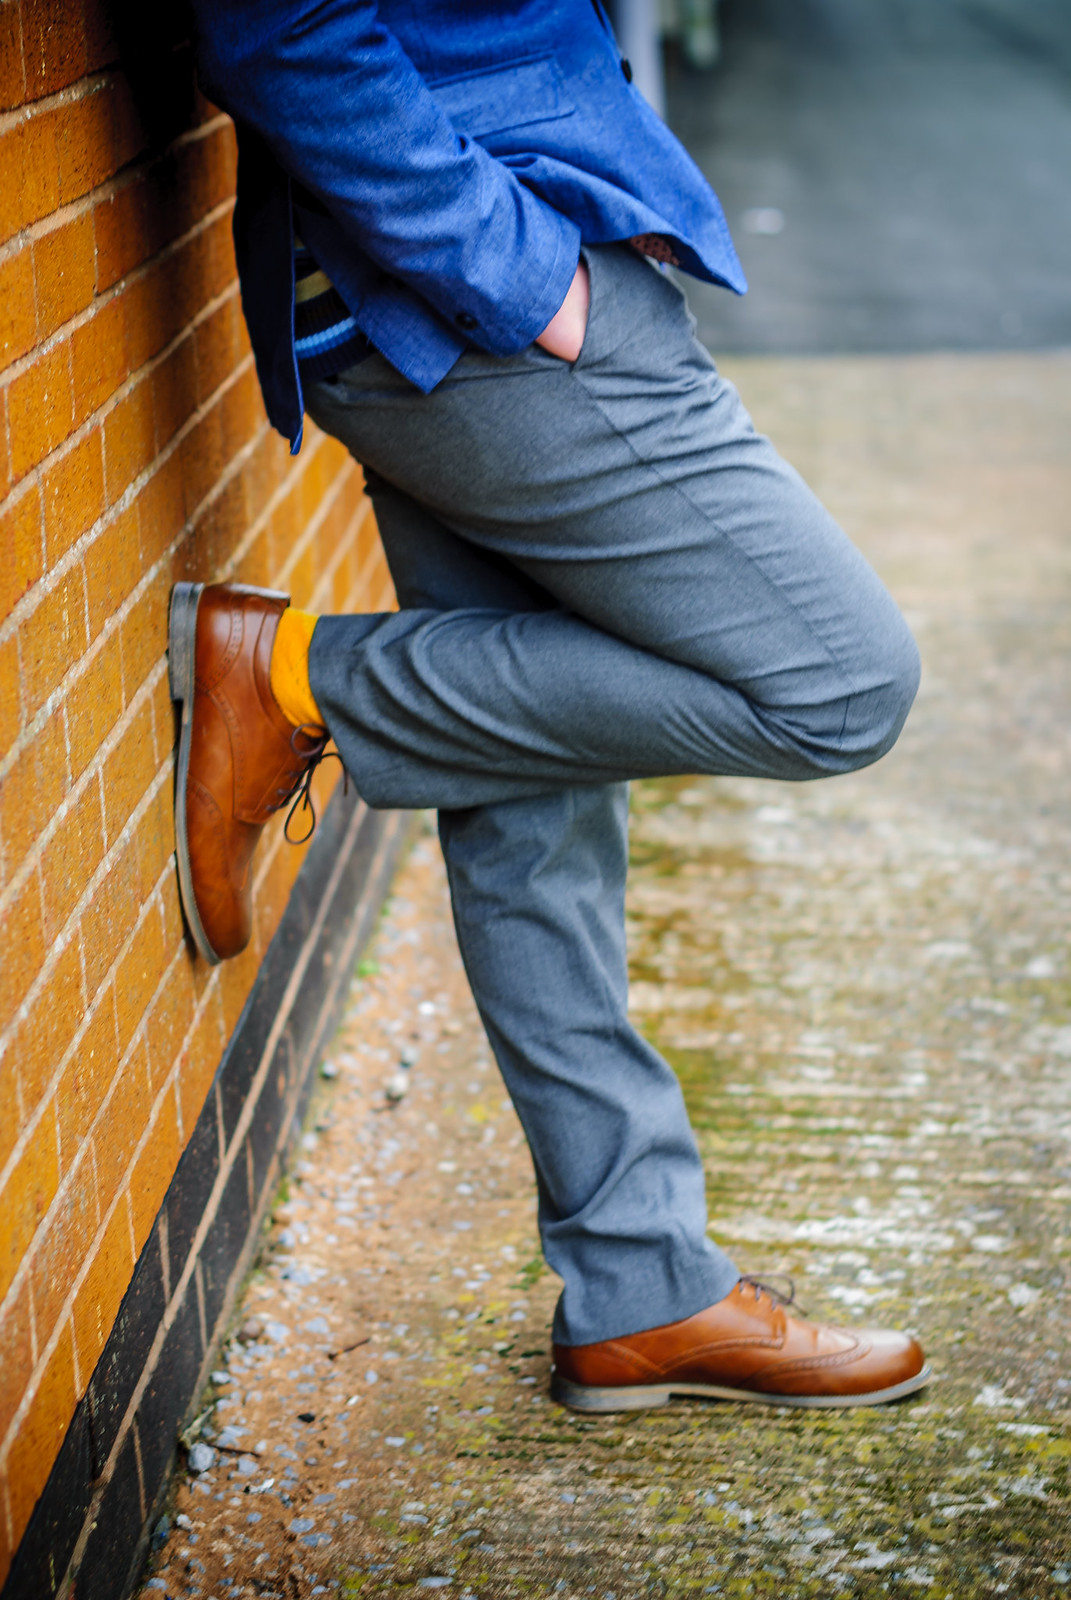 Smart menswear: Blue blazer \ striped sweater \ grey dress trousers \ brown brogues | Silver Londoner, over 40 style